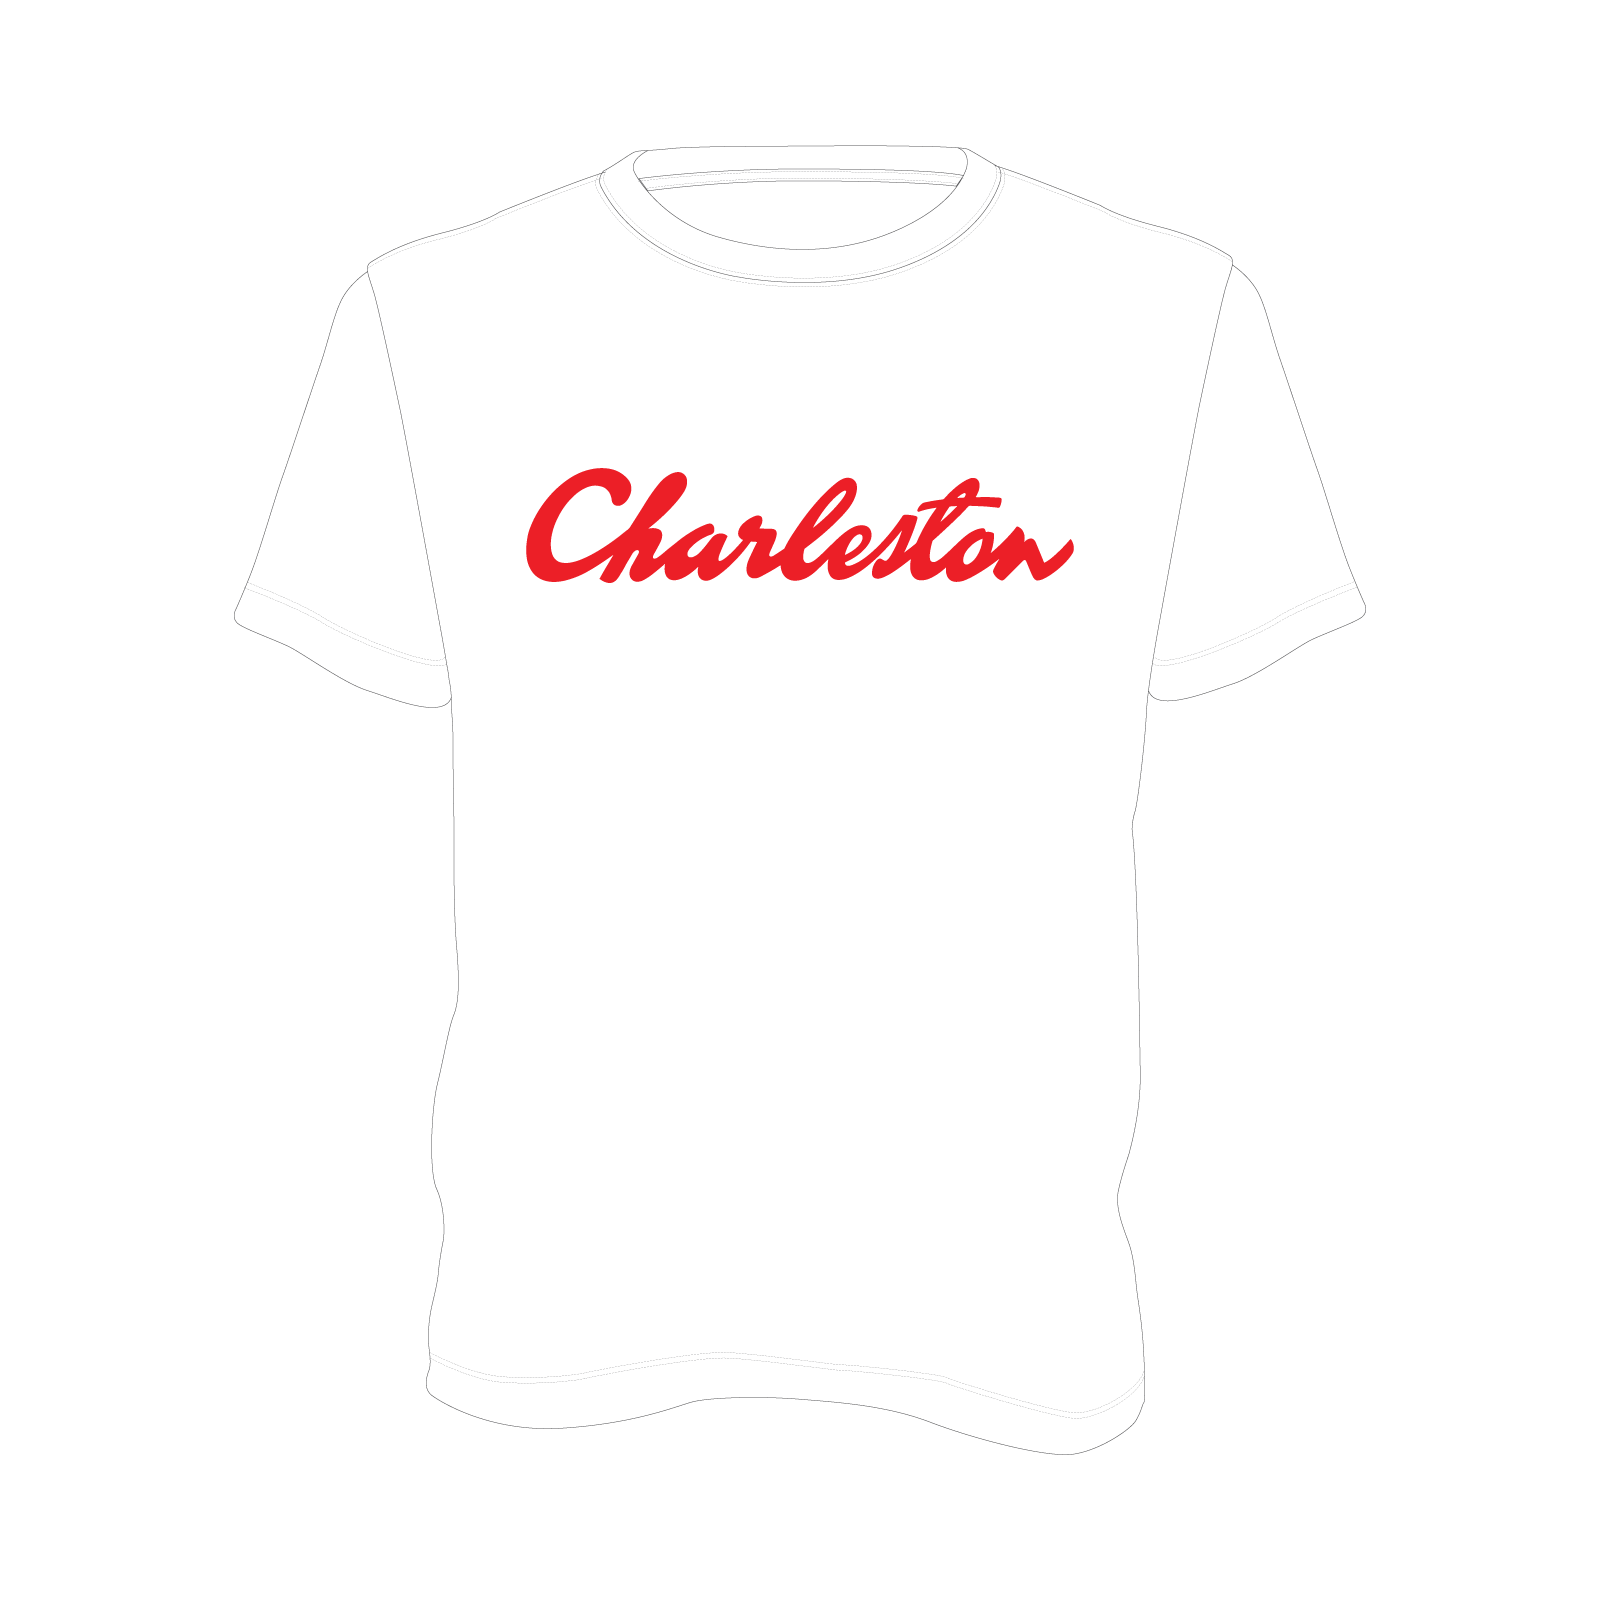 t shirt screen printing charleston sc